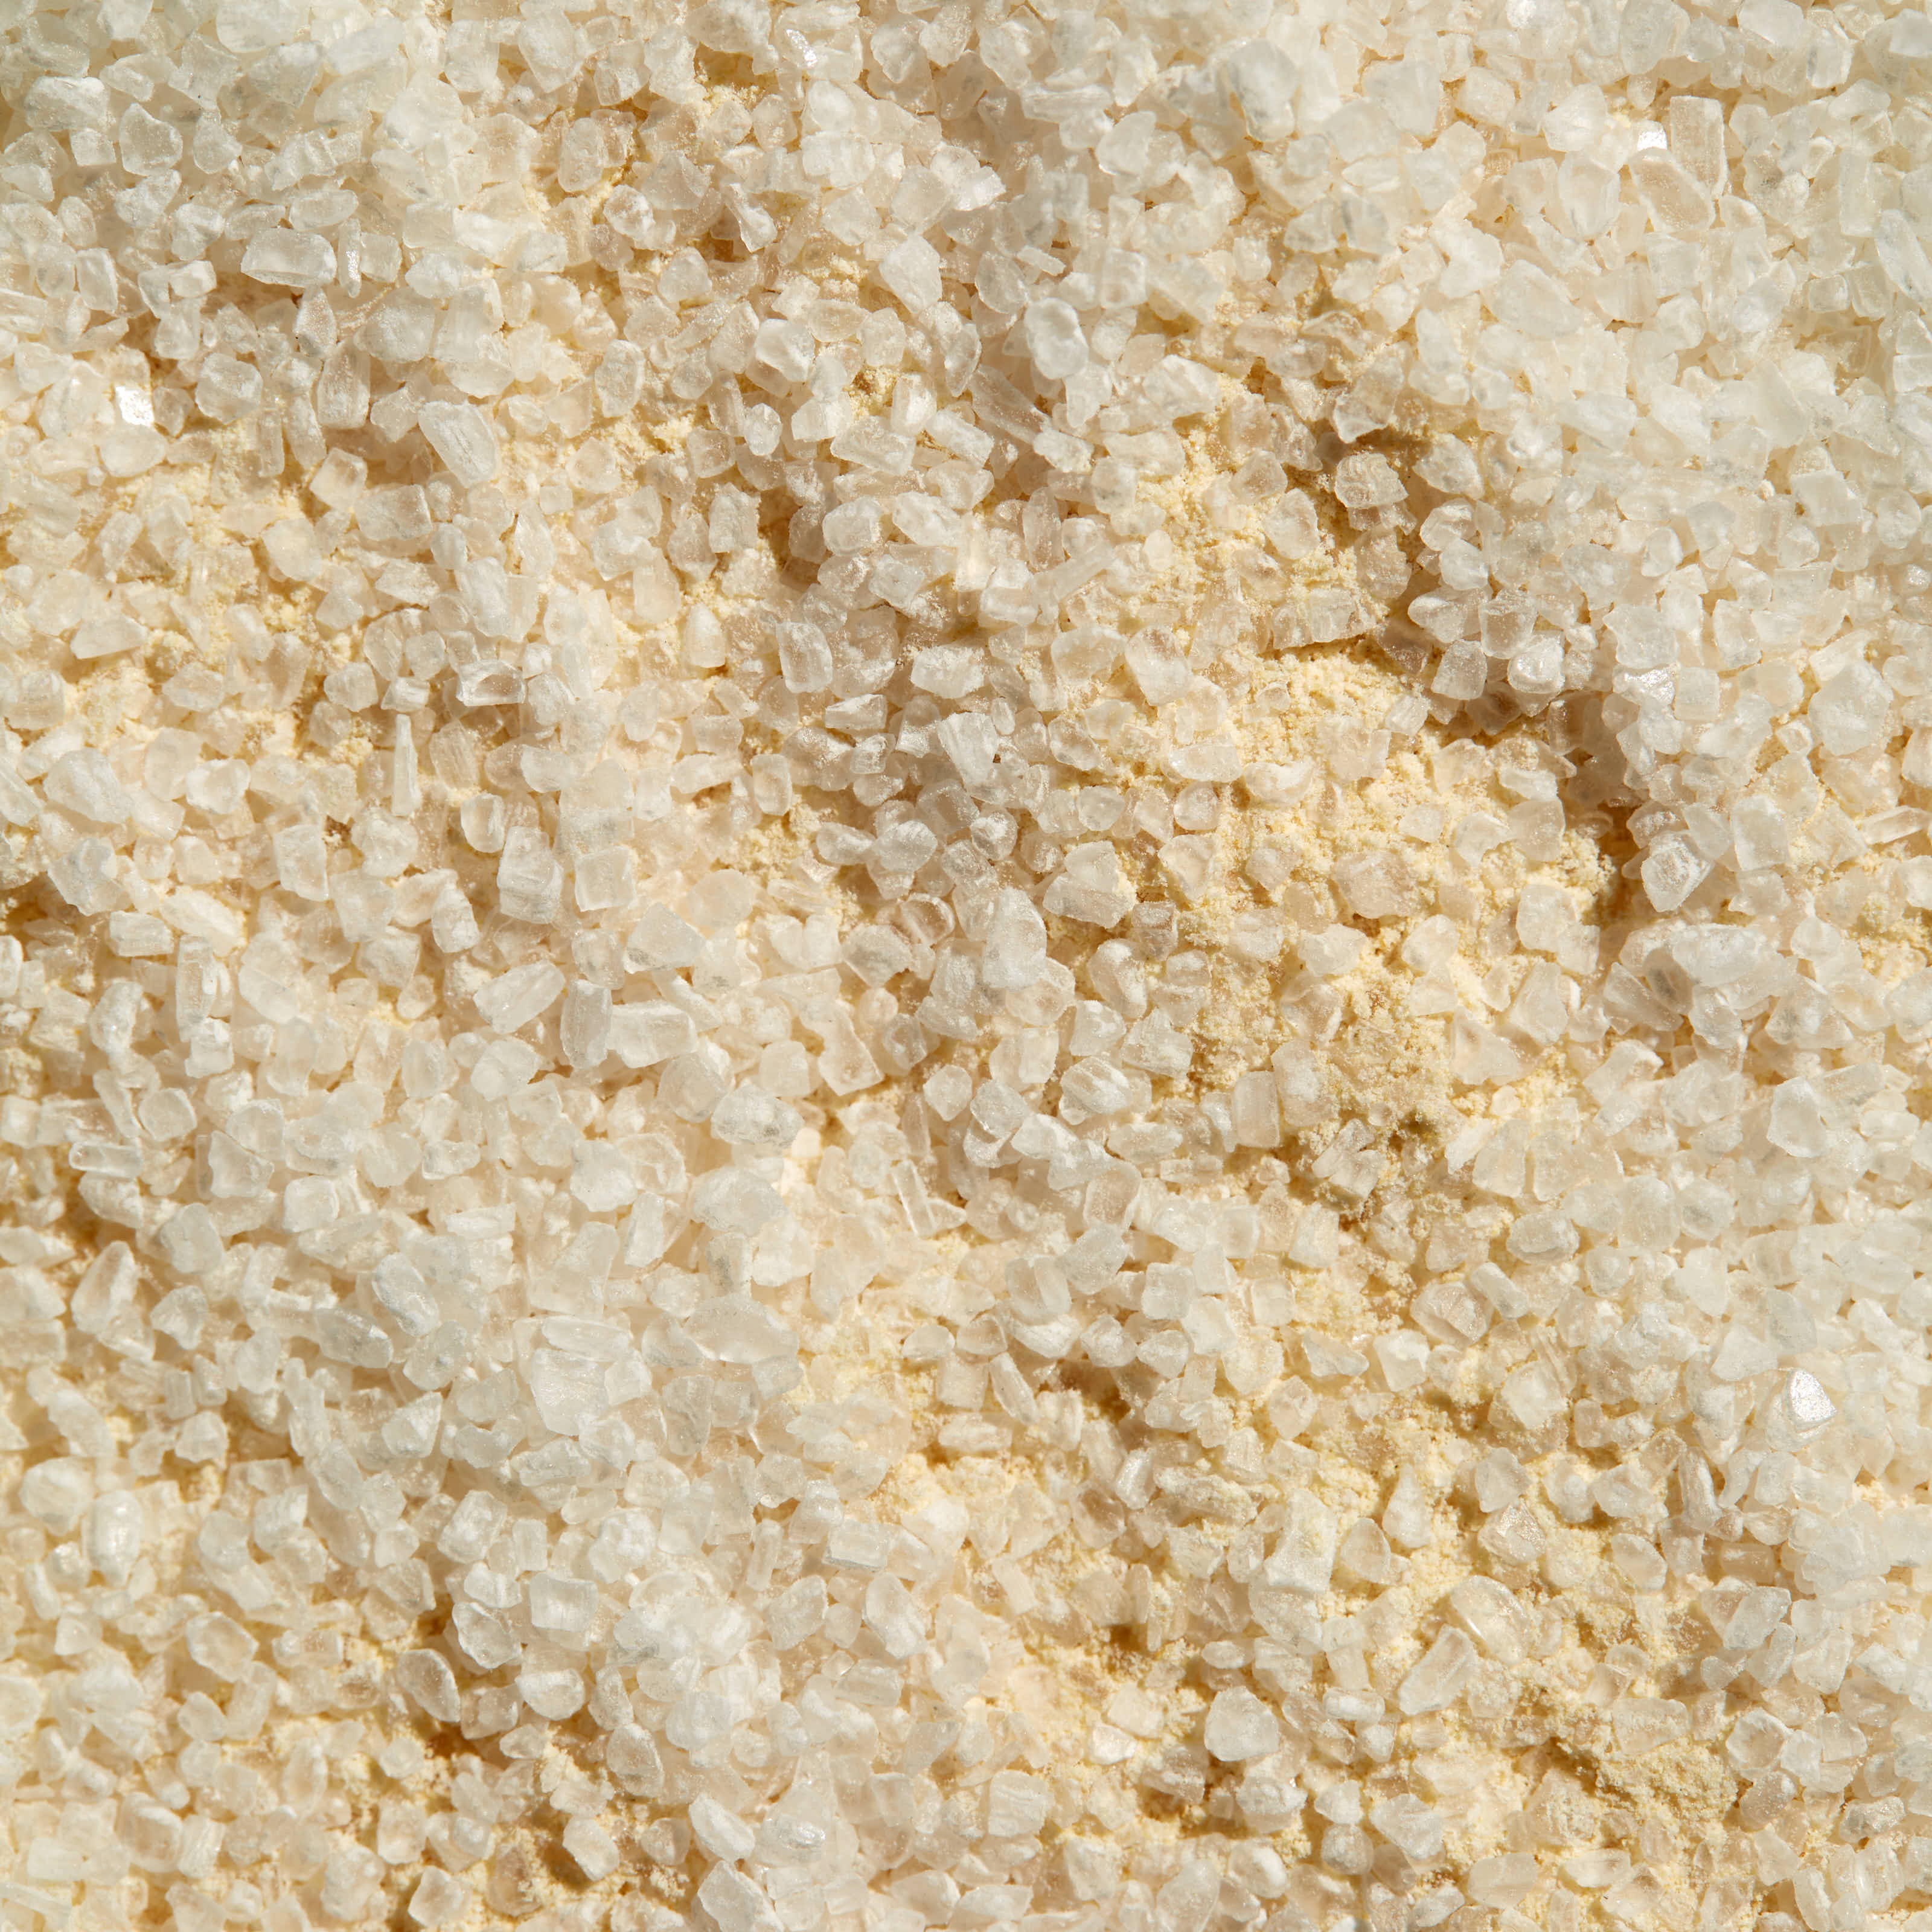 Roasted Garlic Sea Salt Success